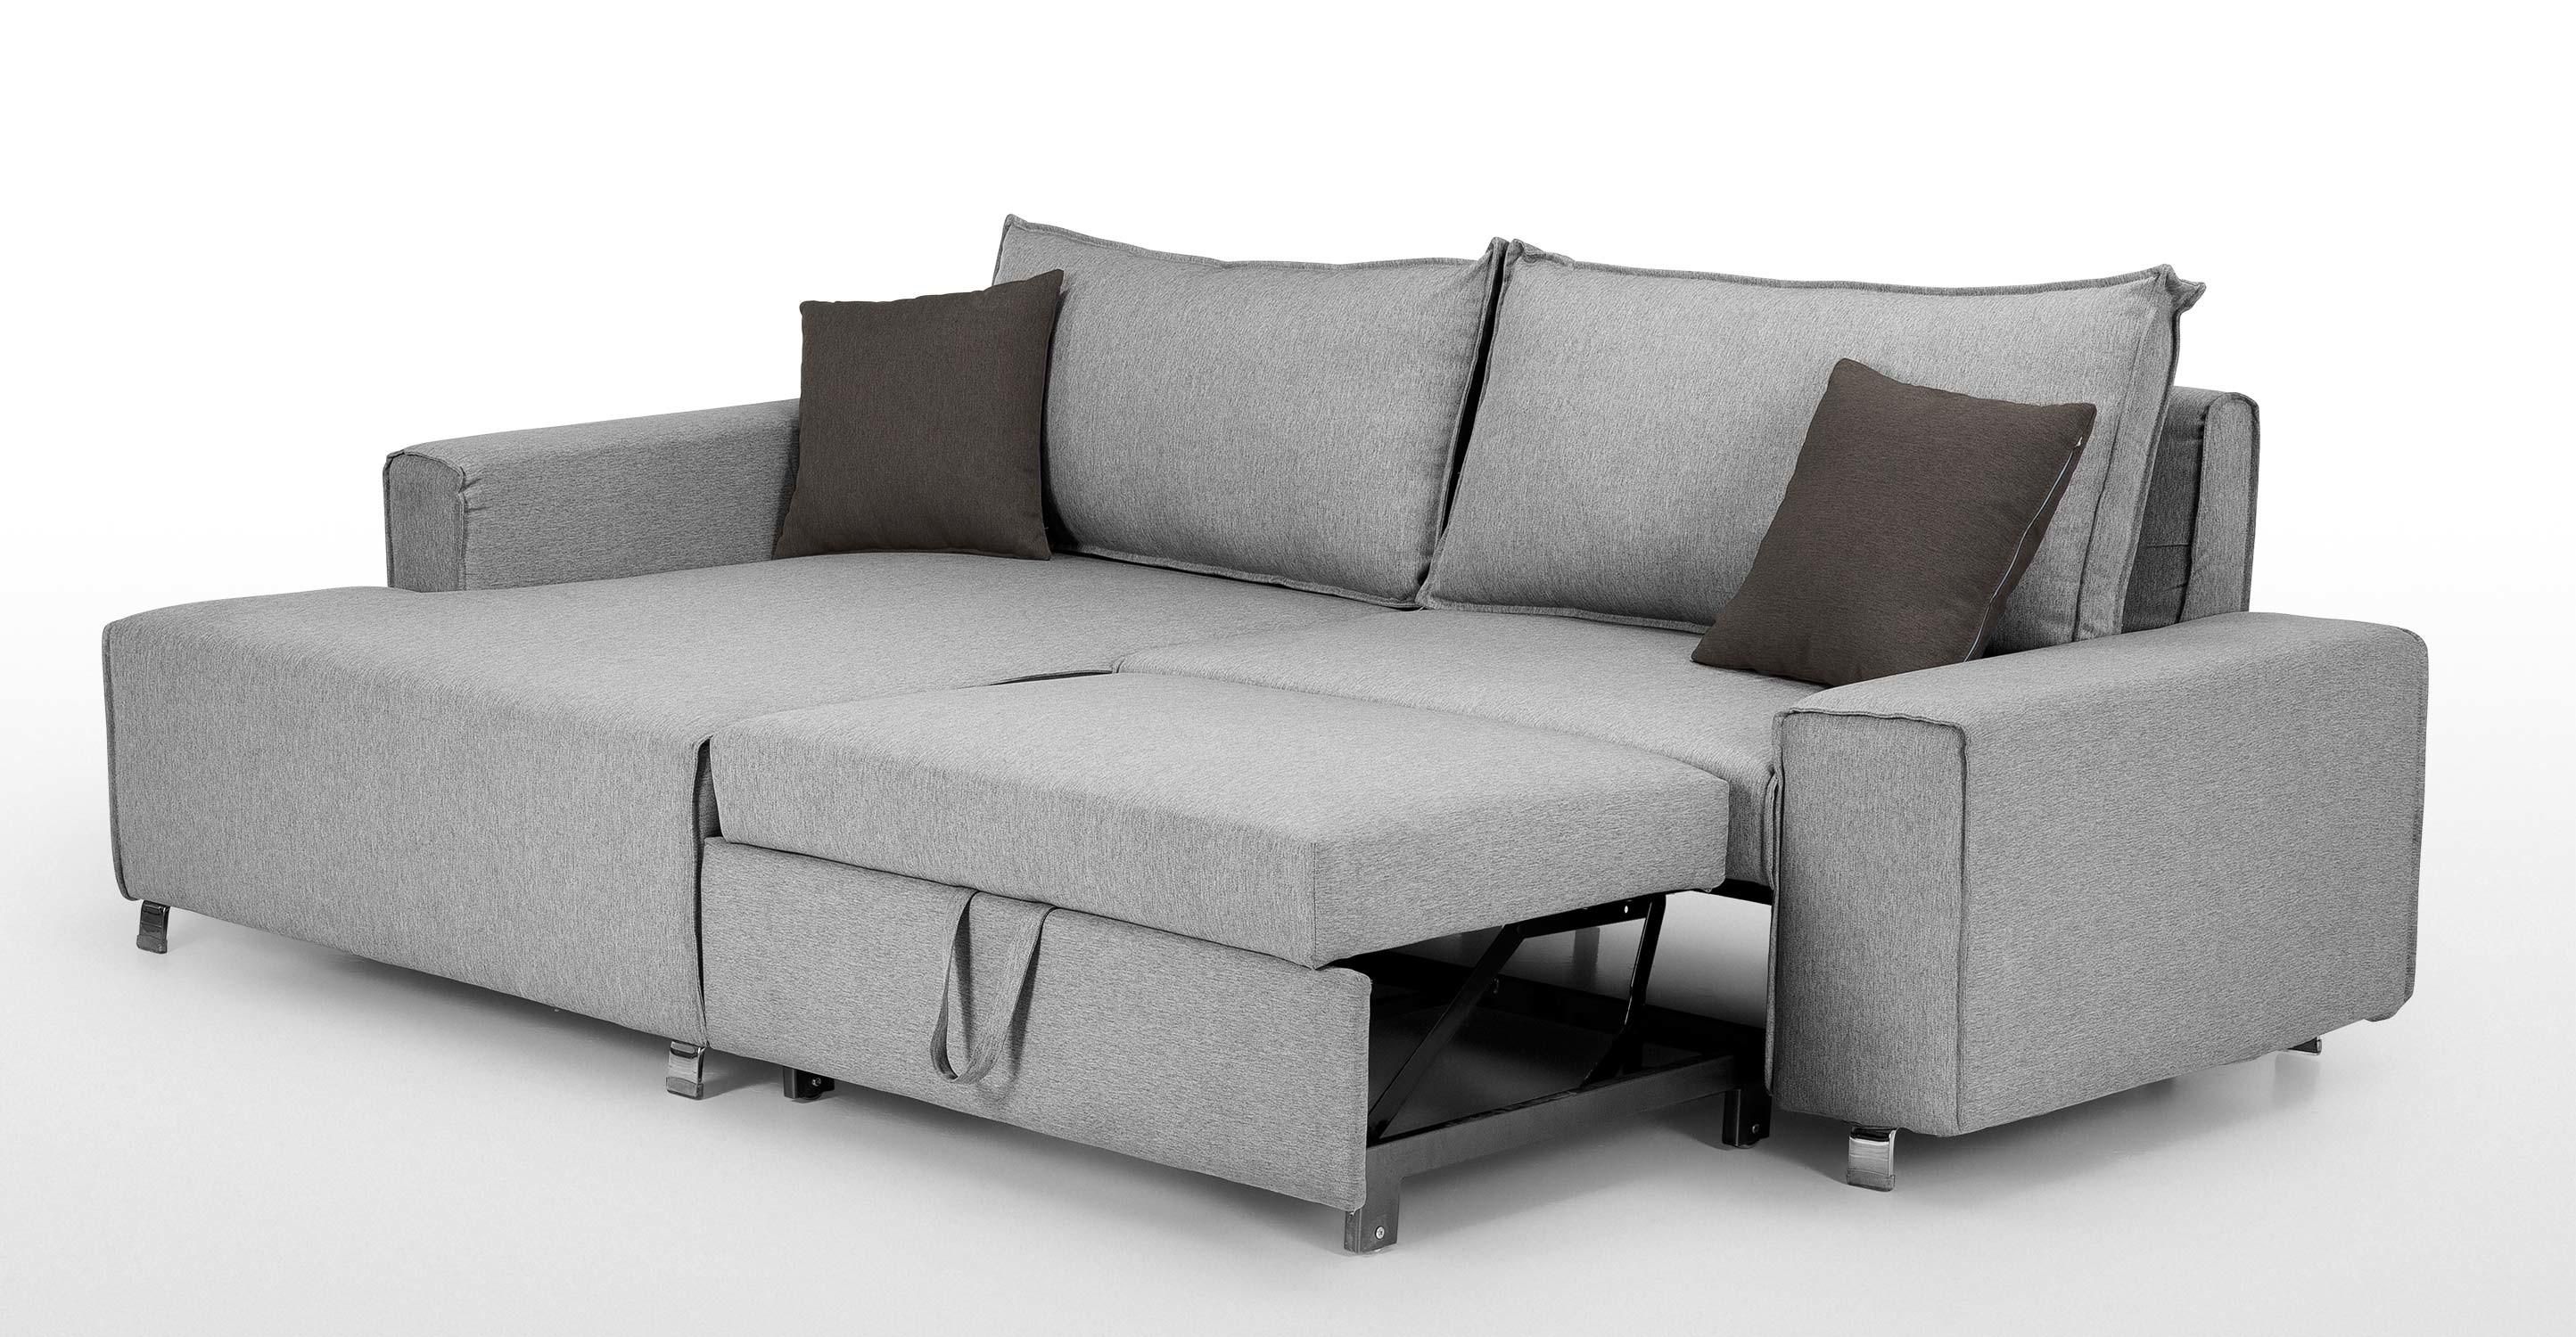 Sit And Sleep Comfortable On Elegant Corner Sofa Beds – Designinyou In Corner Sofa Beds (View 2 of 20)